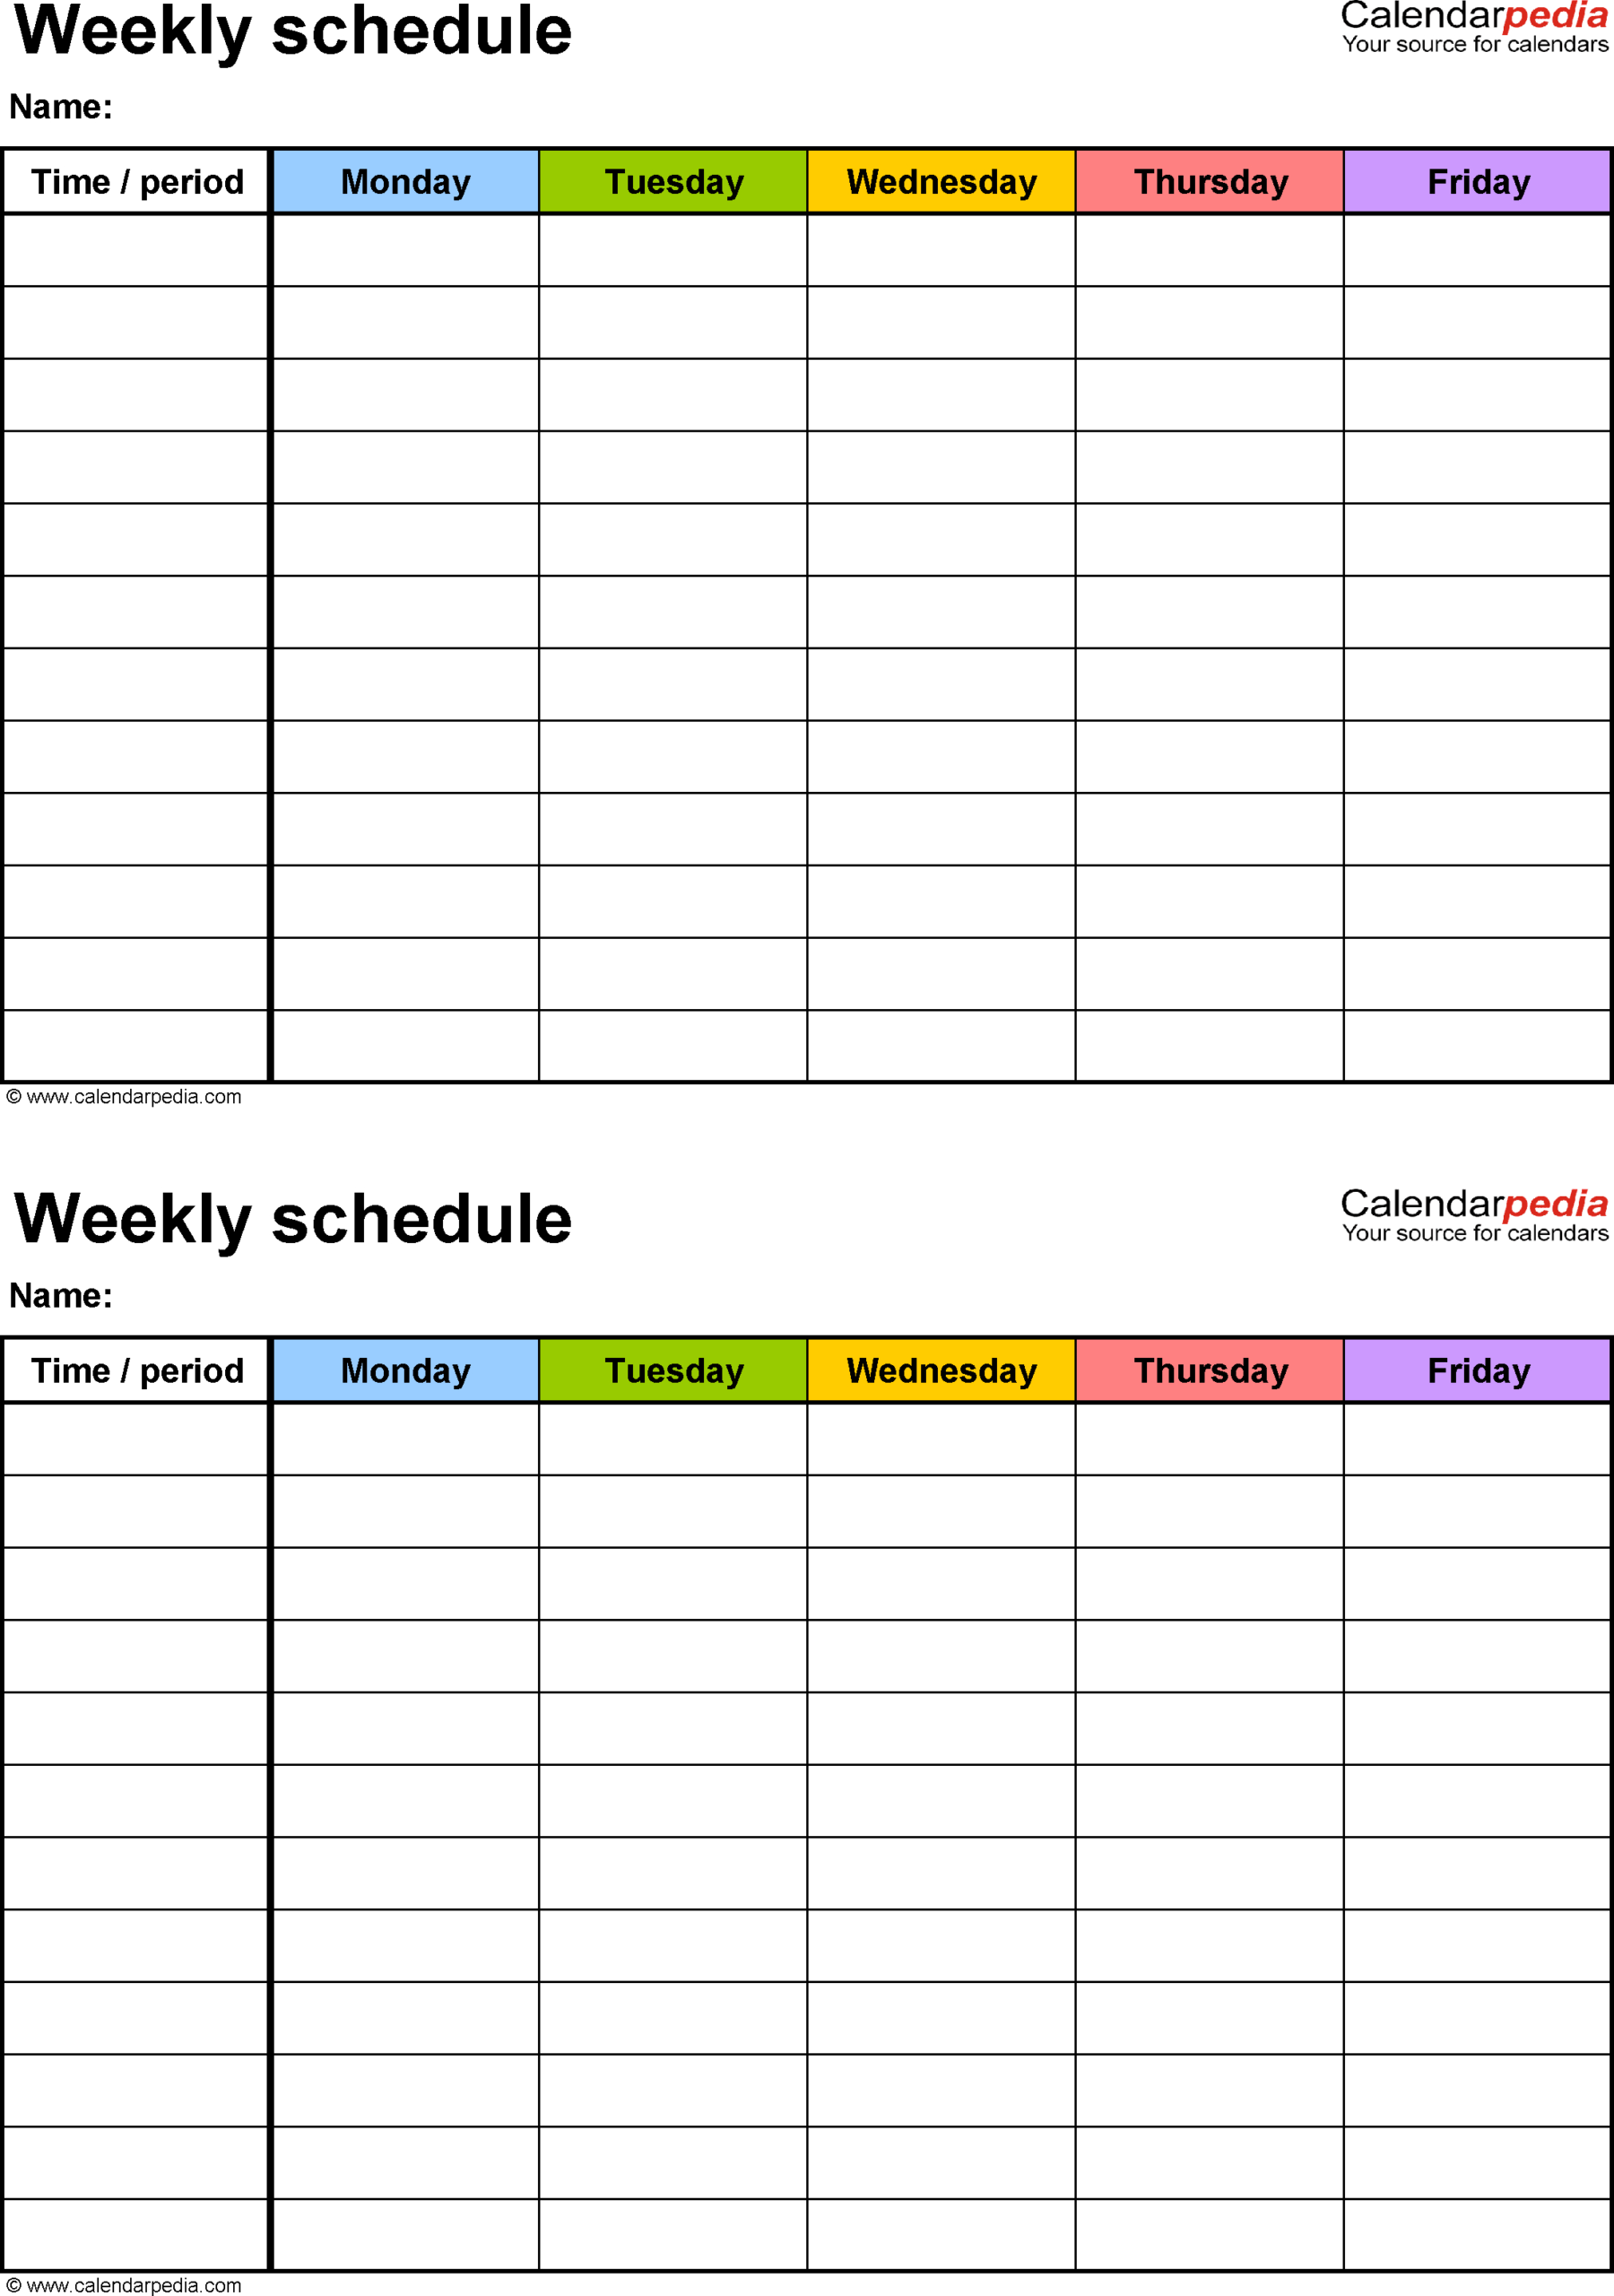 Free 2 Week Calendar | Calendar Printables Free Templates with regard to Two Week Calendar Template